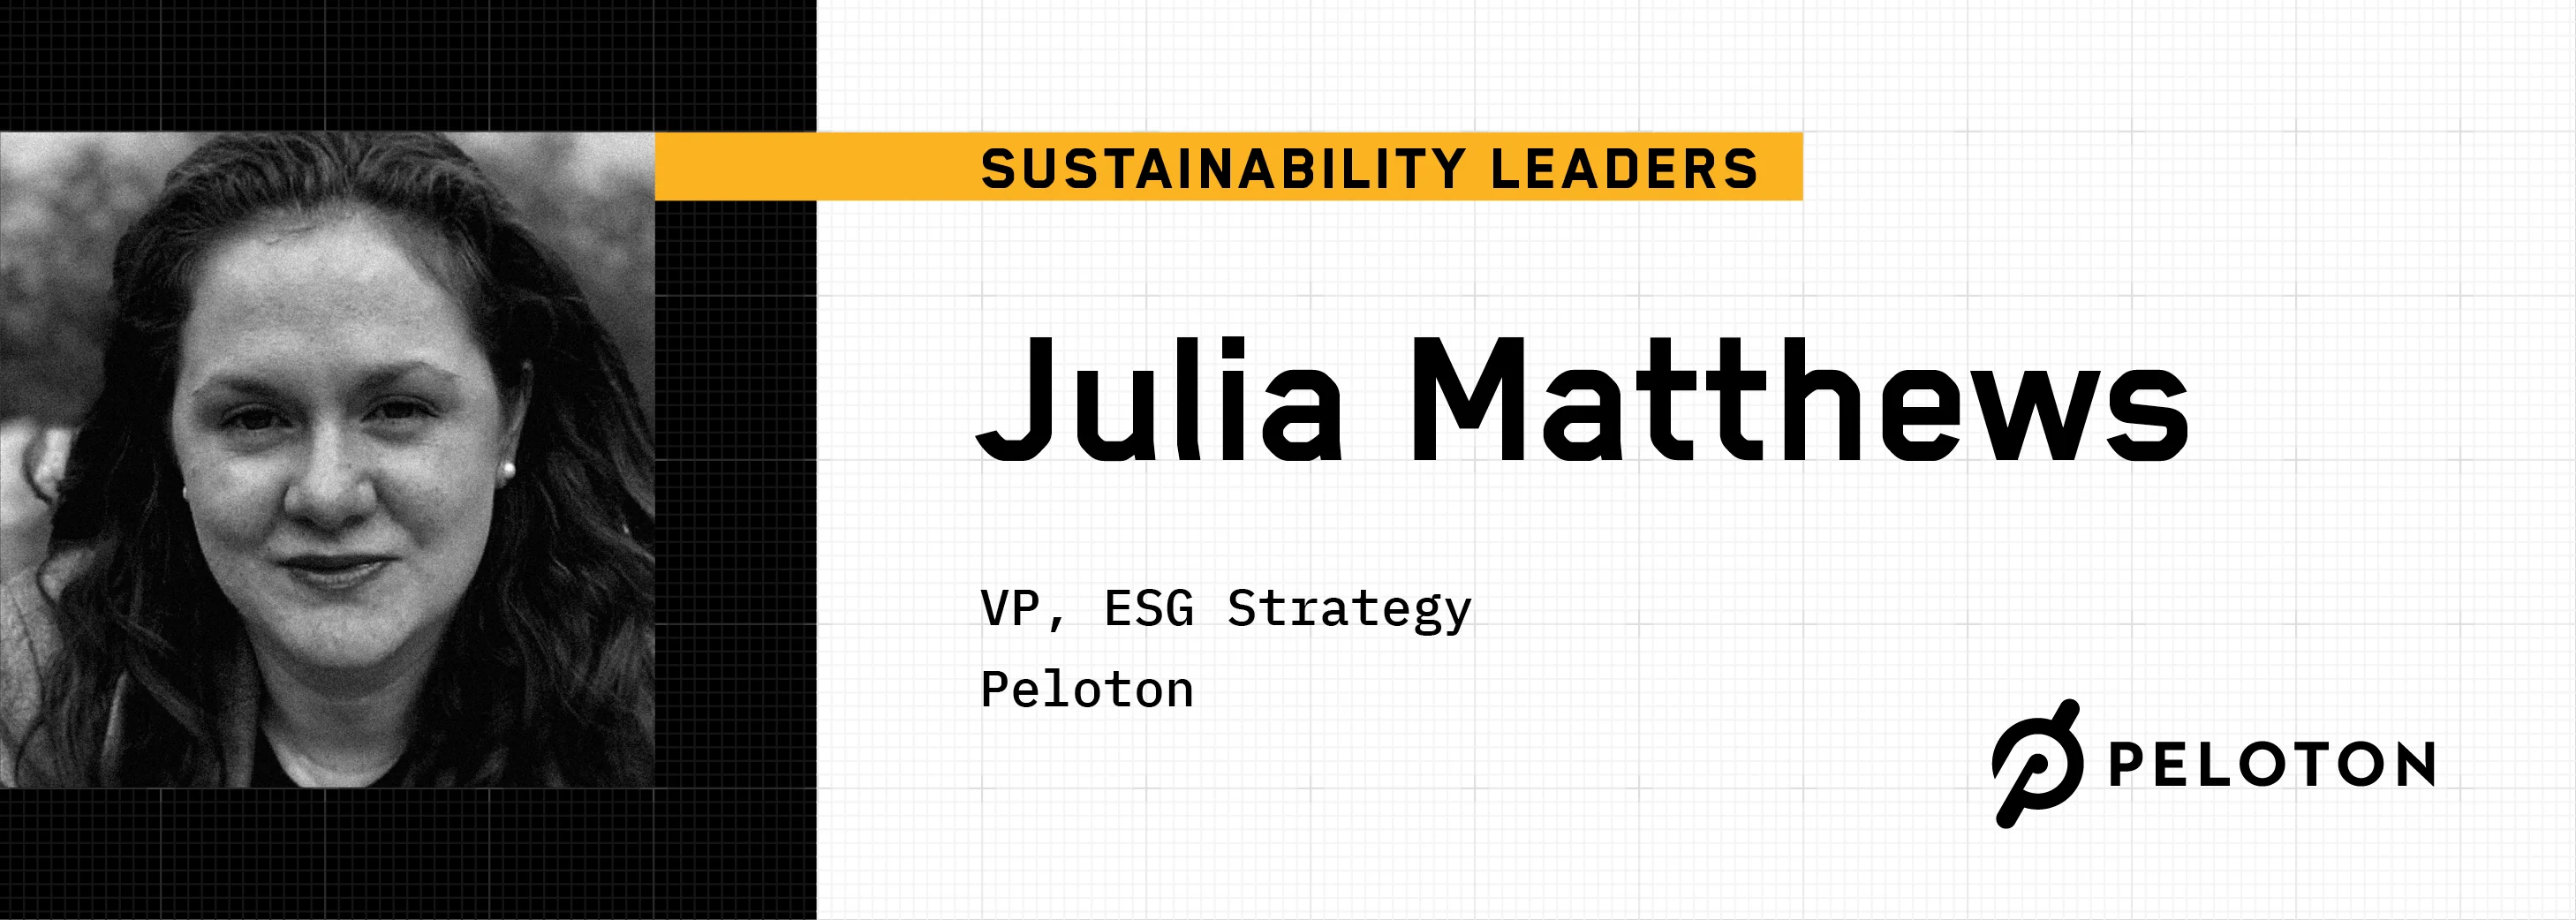 Julia Matthews VP, ESG Strategy at Peloton